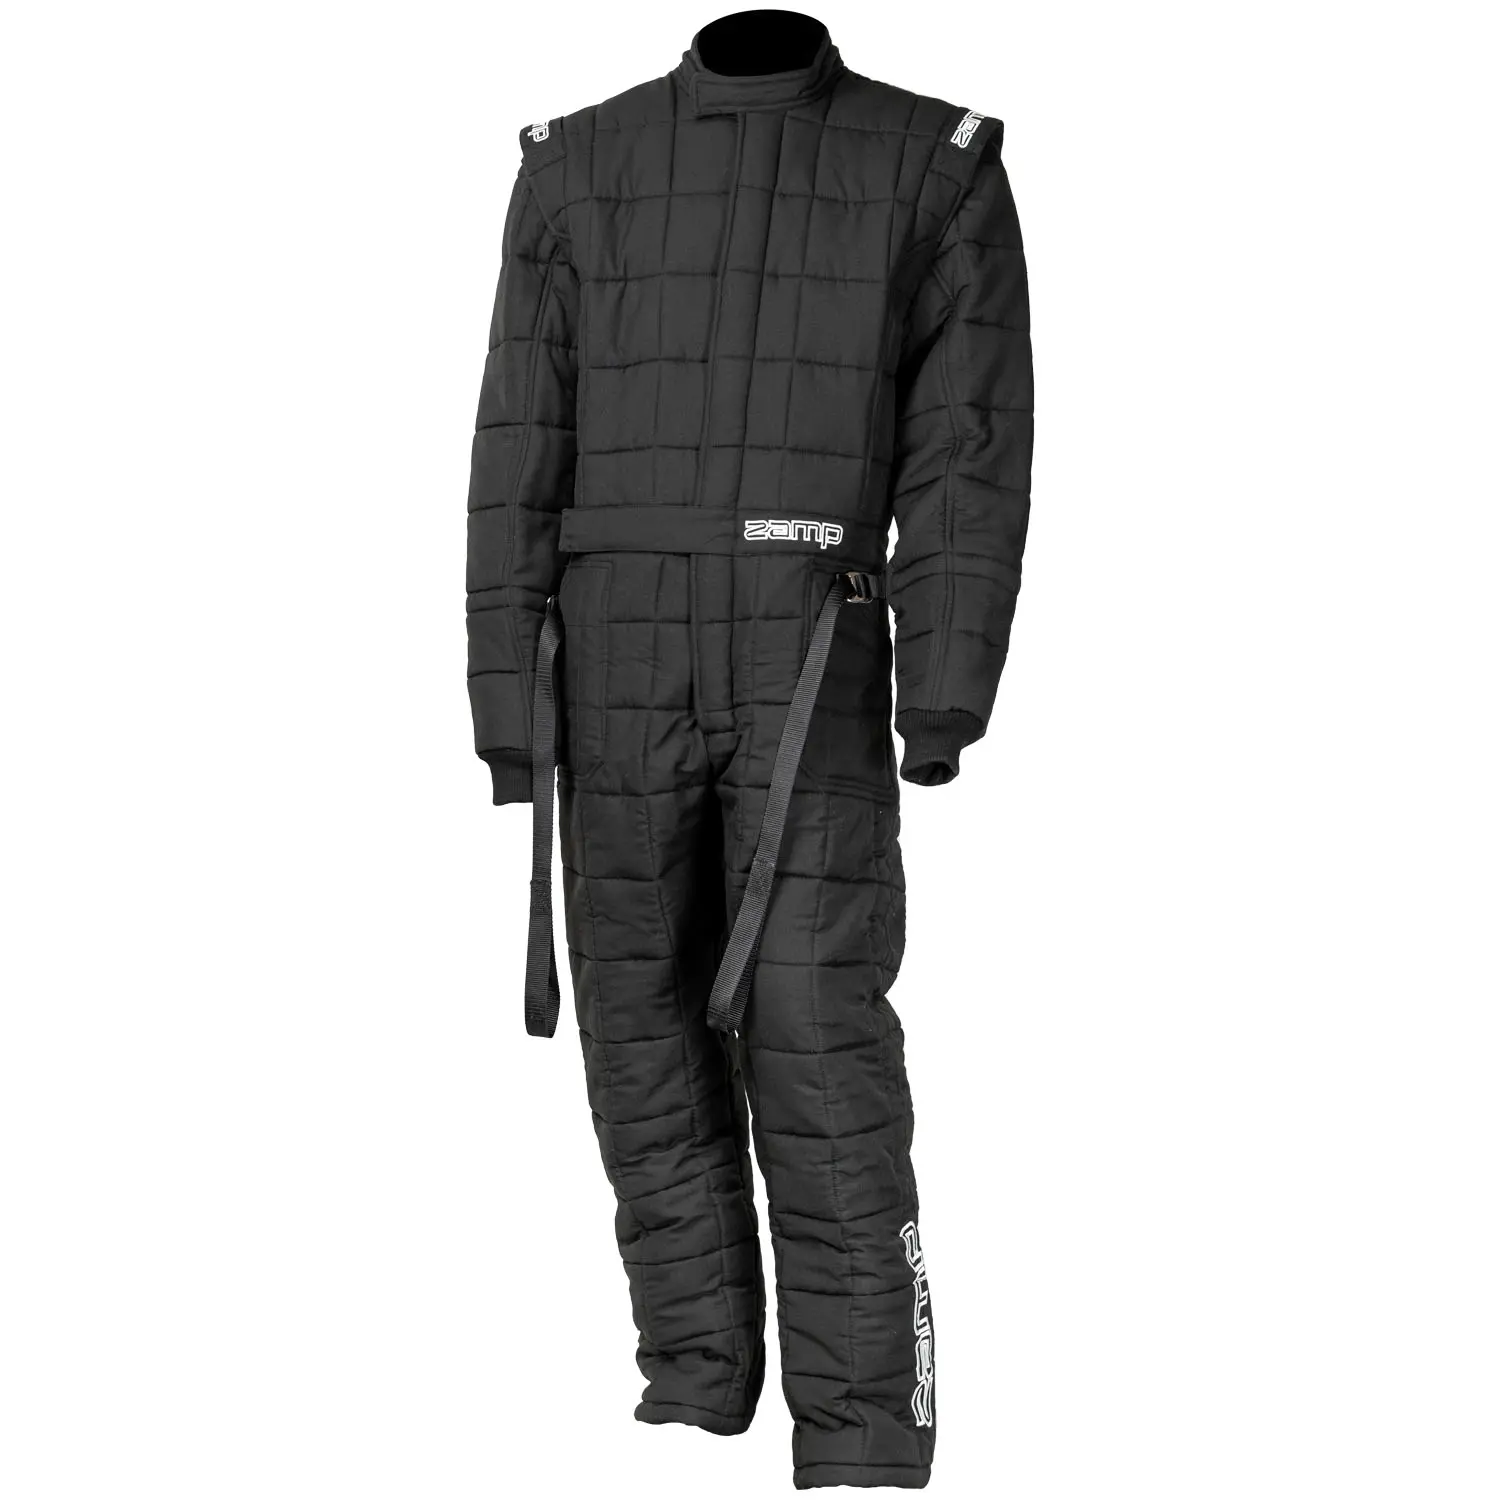 ZR-Drag Racing Suit